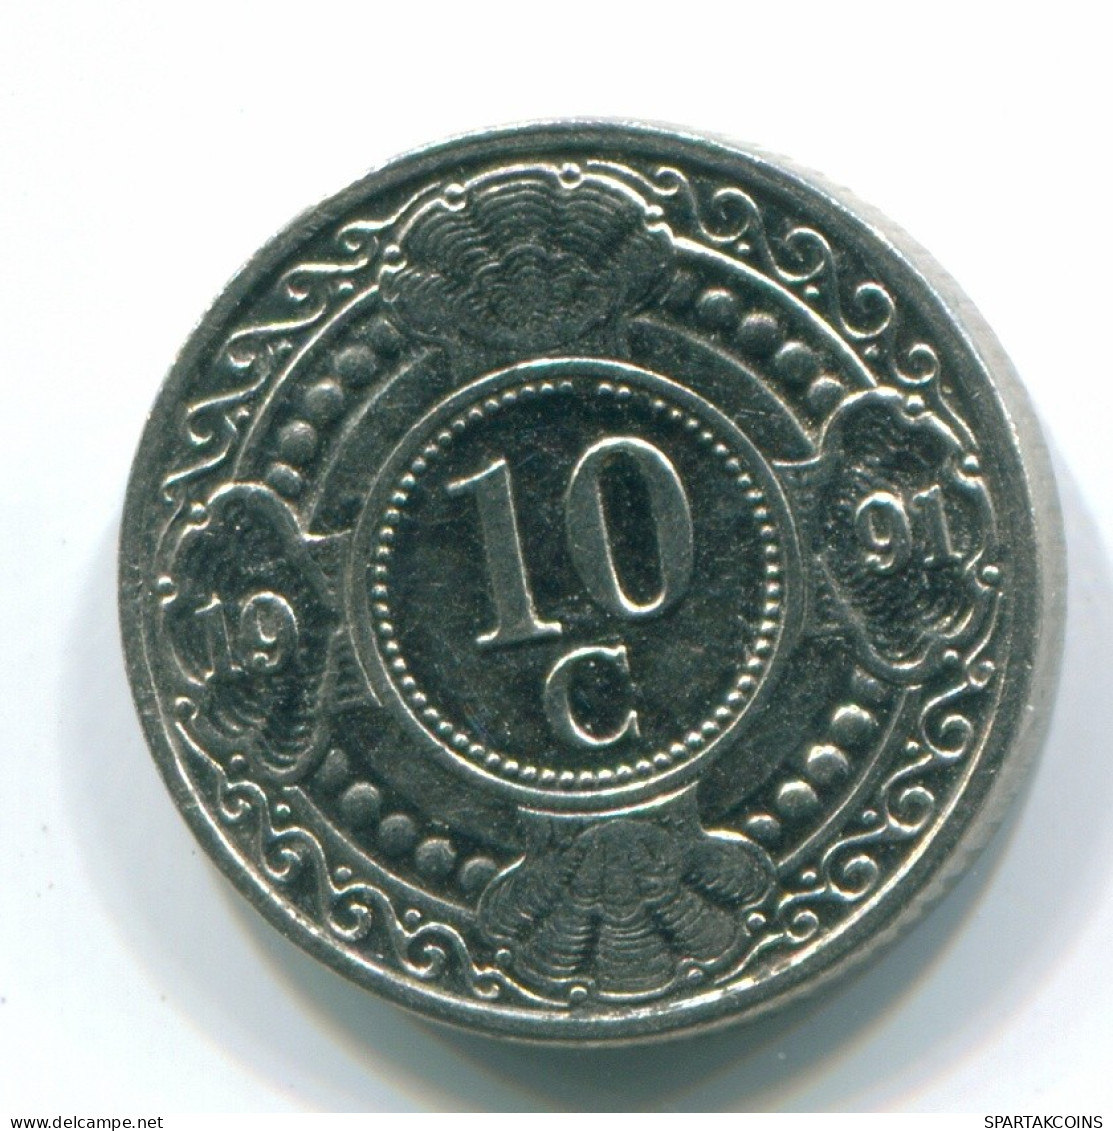 10 CENTS 1991 NETHERLANDS ANTILLES Nickel Colonial Coin #S11328.U.A - Nederlandse Antillen